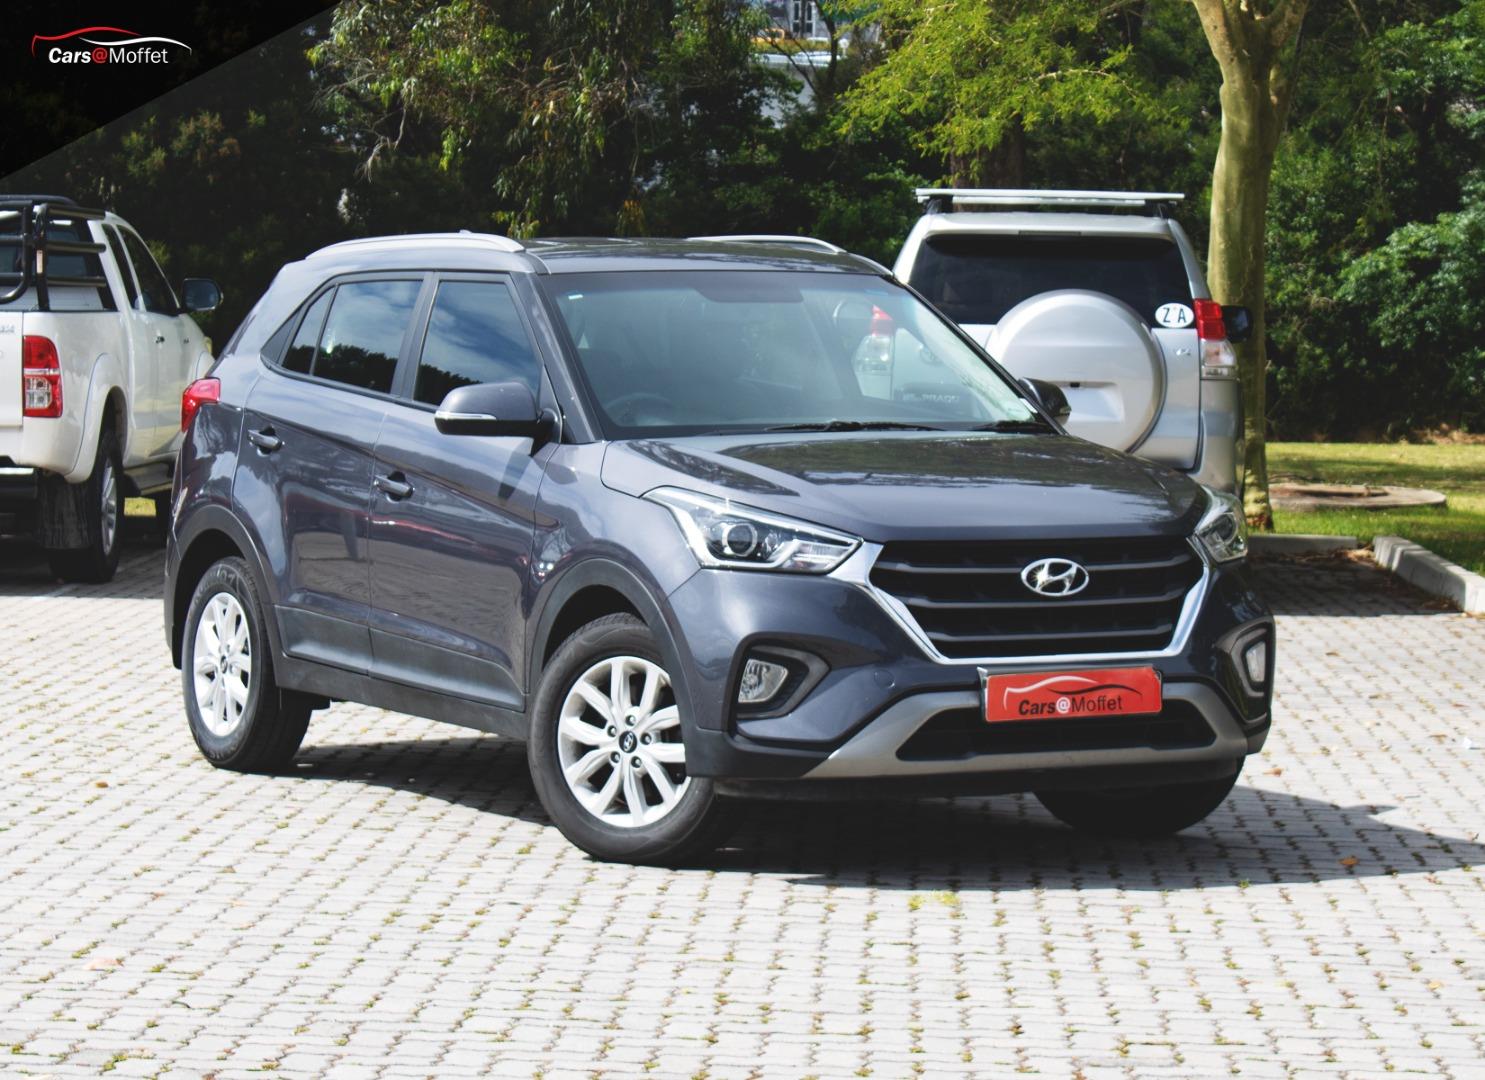 2020 Hyundai Creta 1.6 Executive For Sale